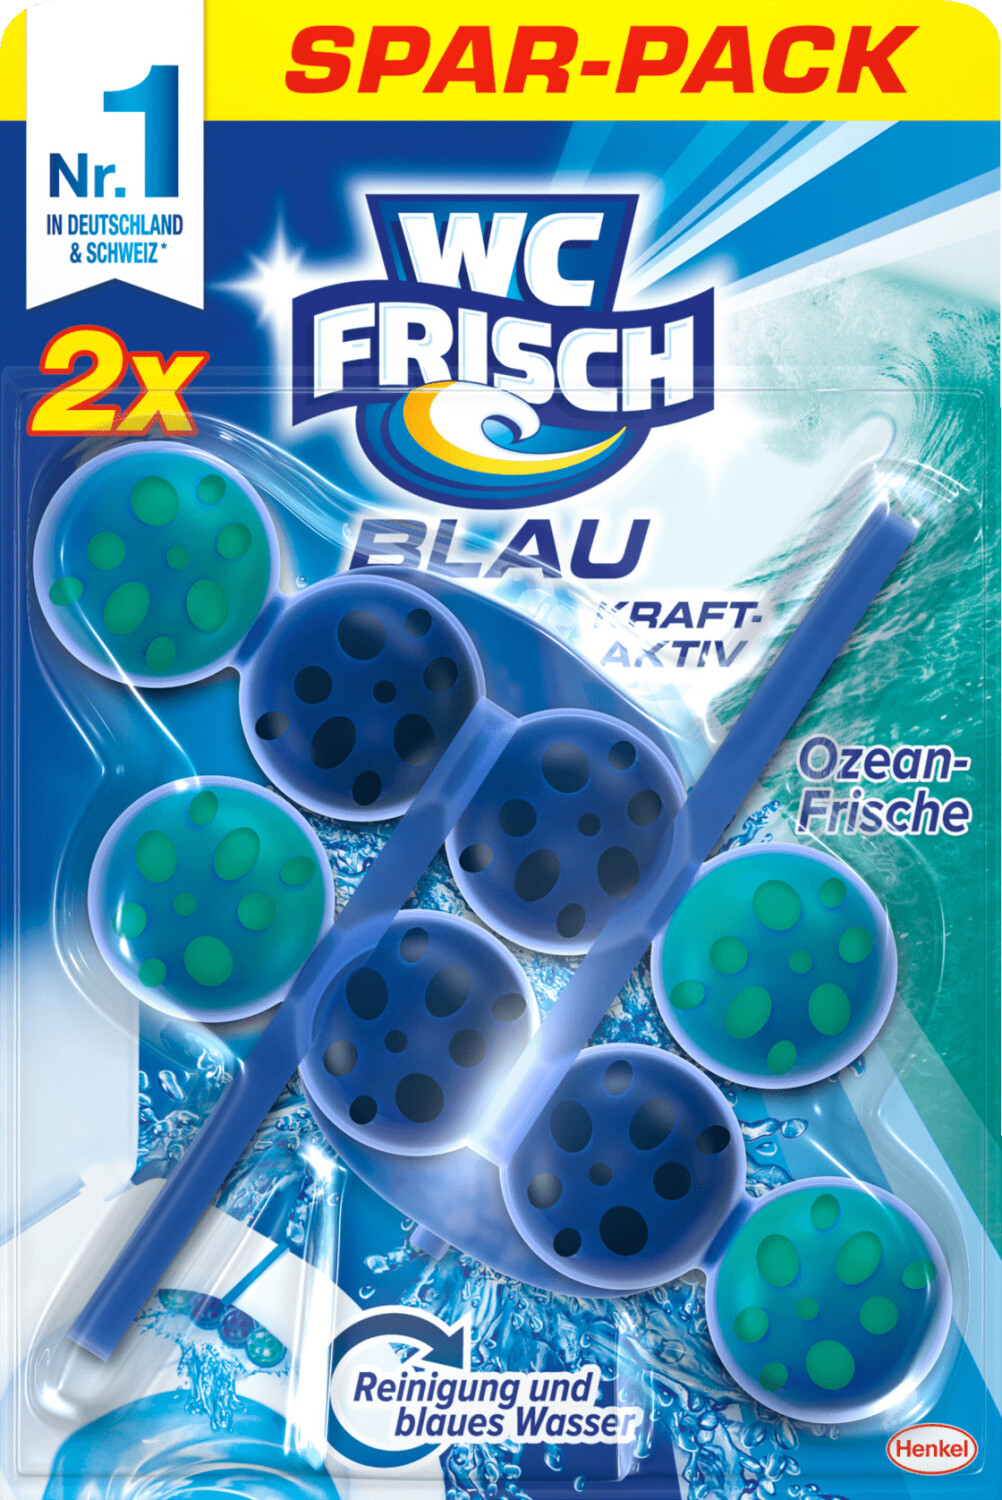 WC Frisch Blau Kraft-Aktiv Ozean 50 g Acheter chez JUMBO